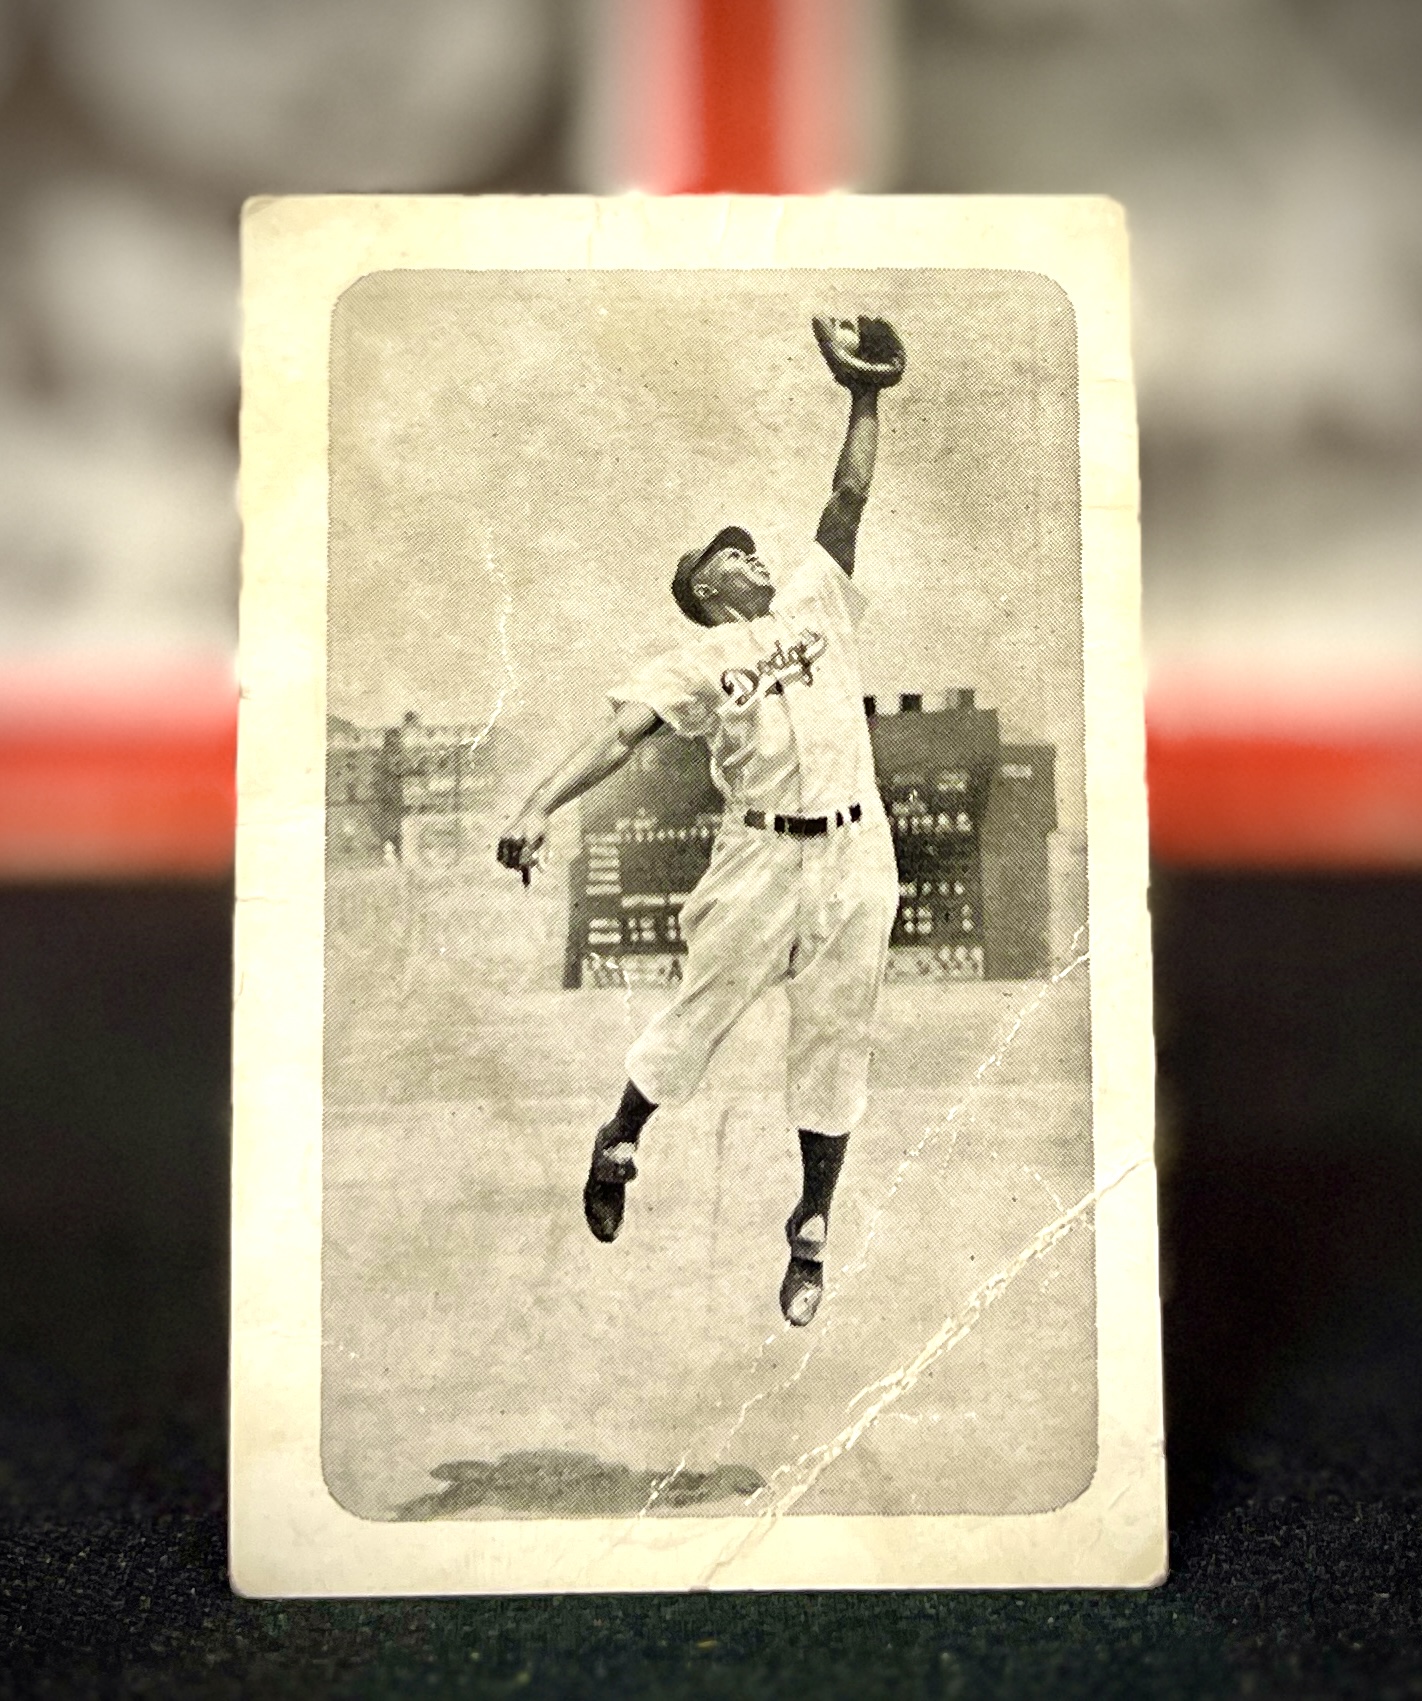 1947 Jackie Robinson Bond Bread Baseball Rookie Card Rounded Corners Ex +  REAL ! - Cardboard Memories